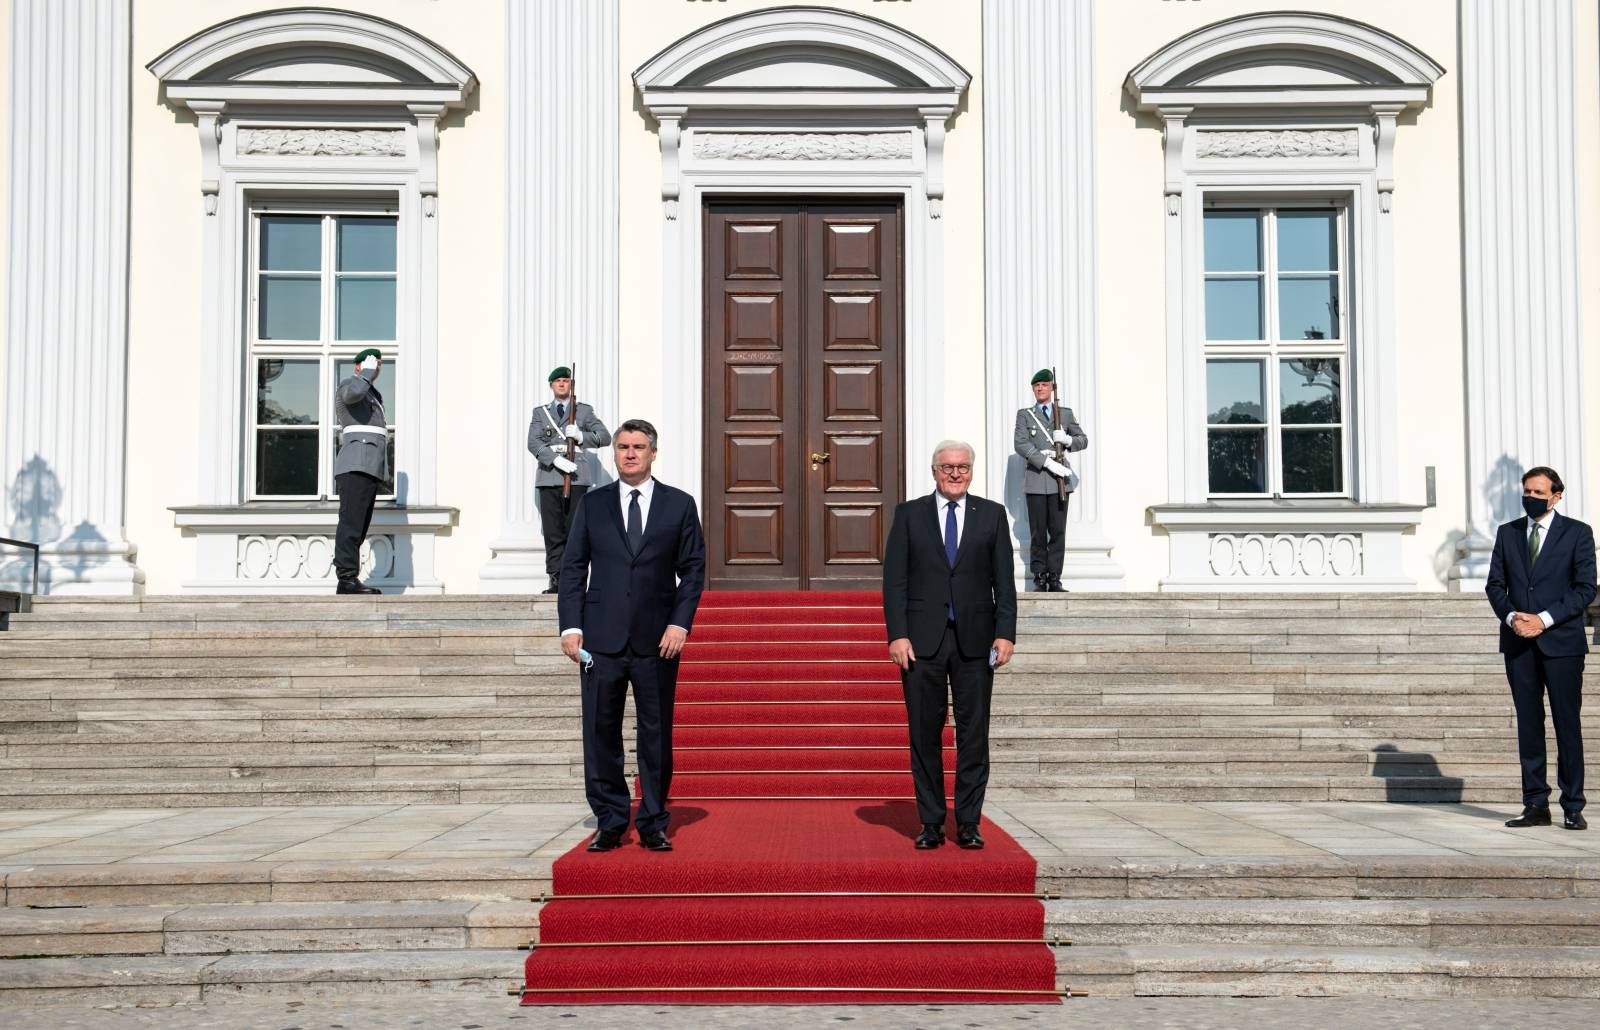 Federal President receives Croatian President